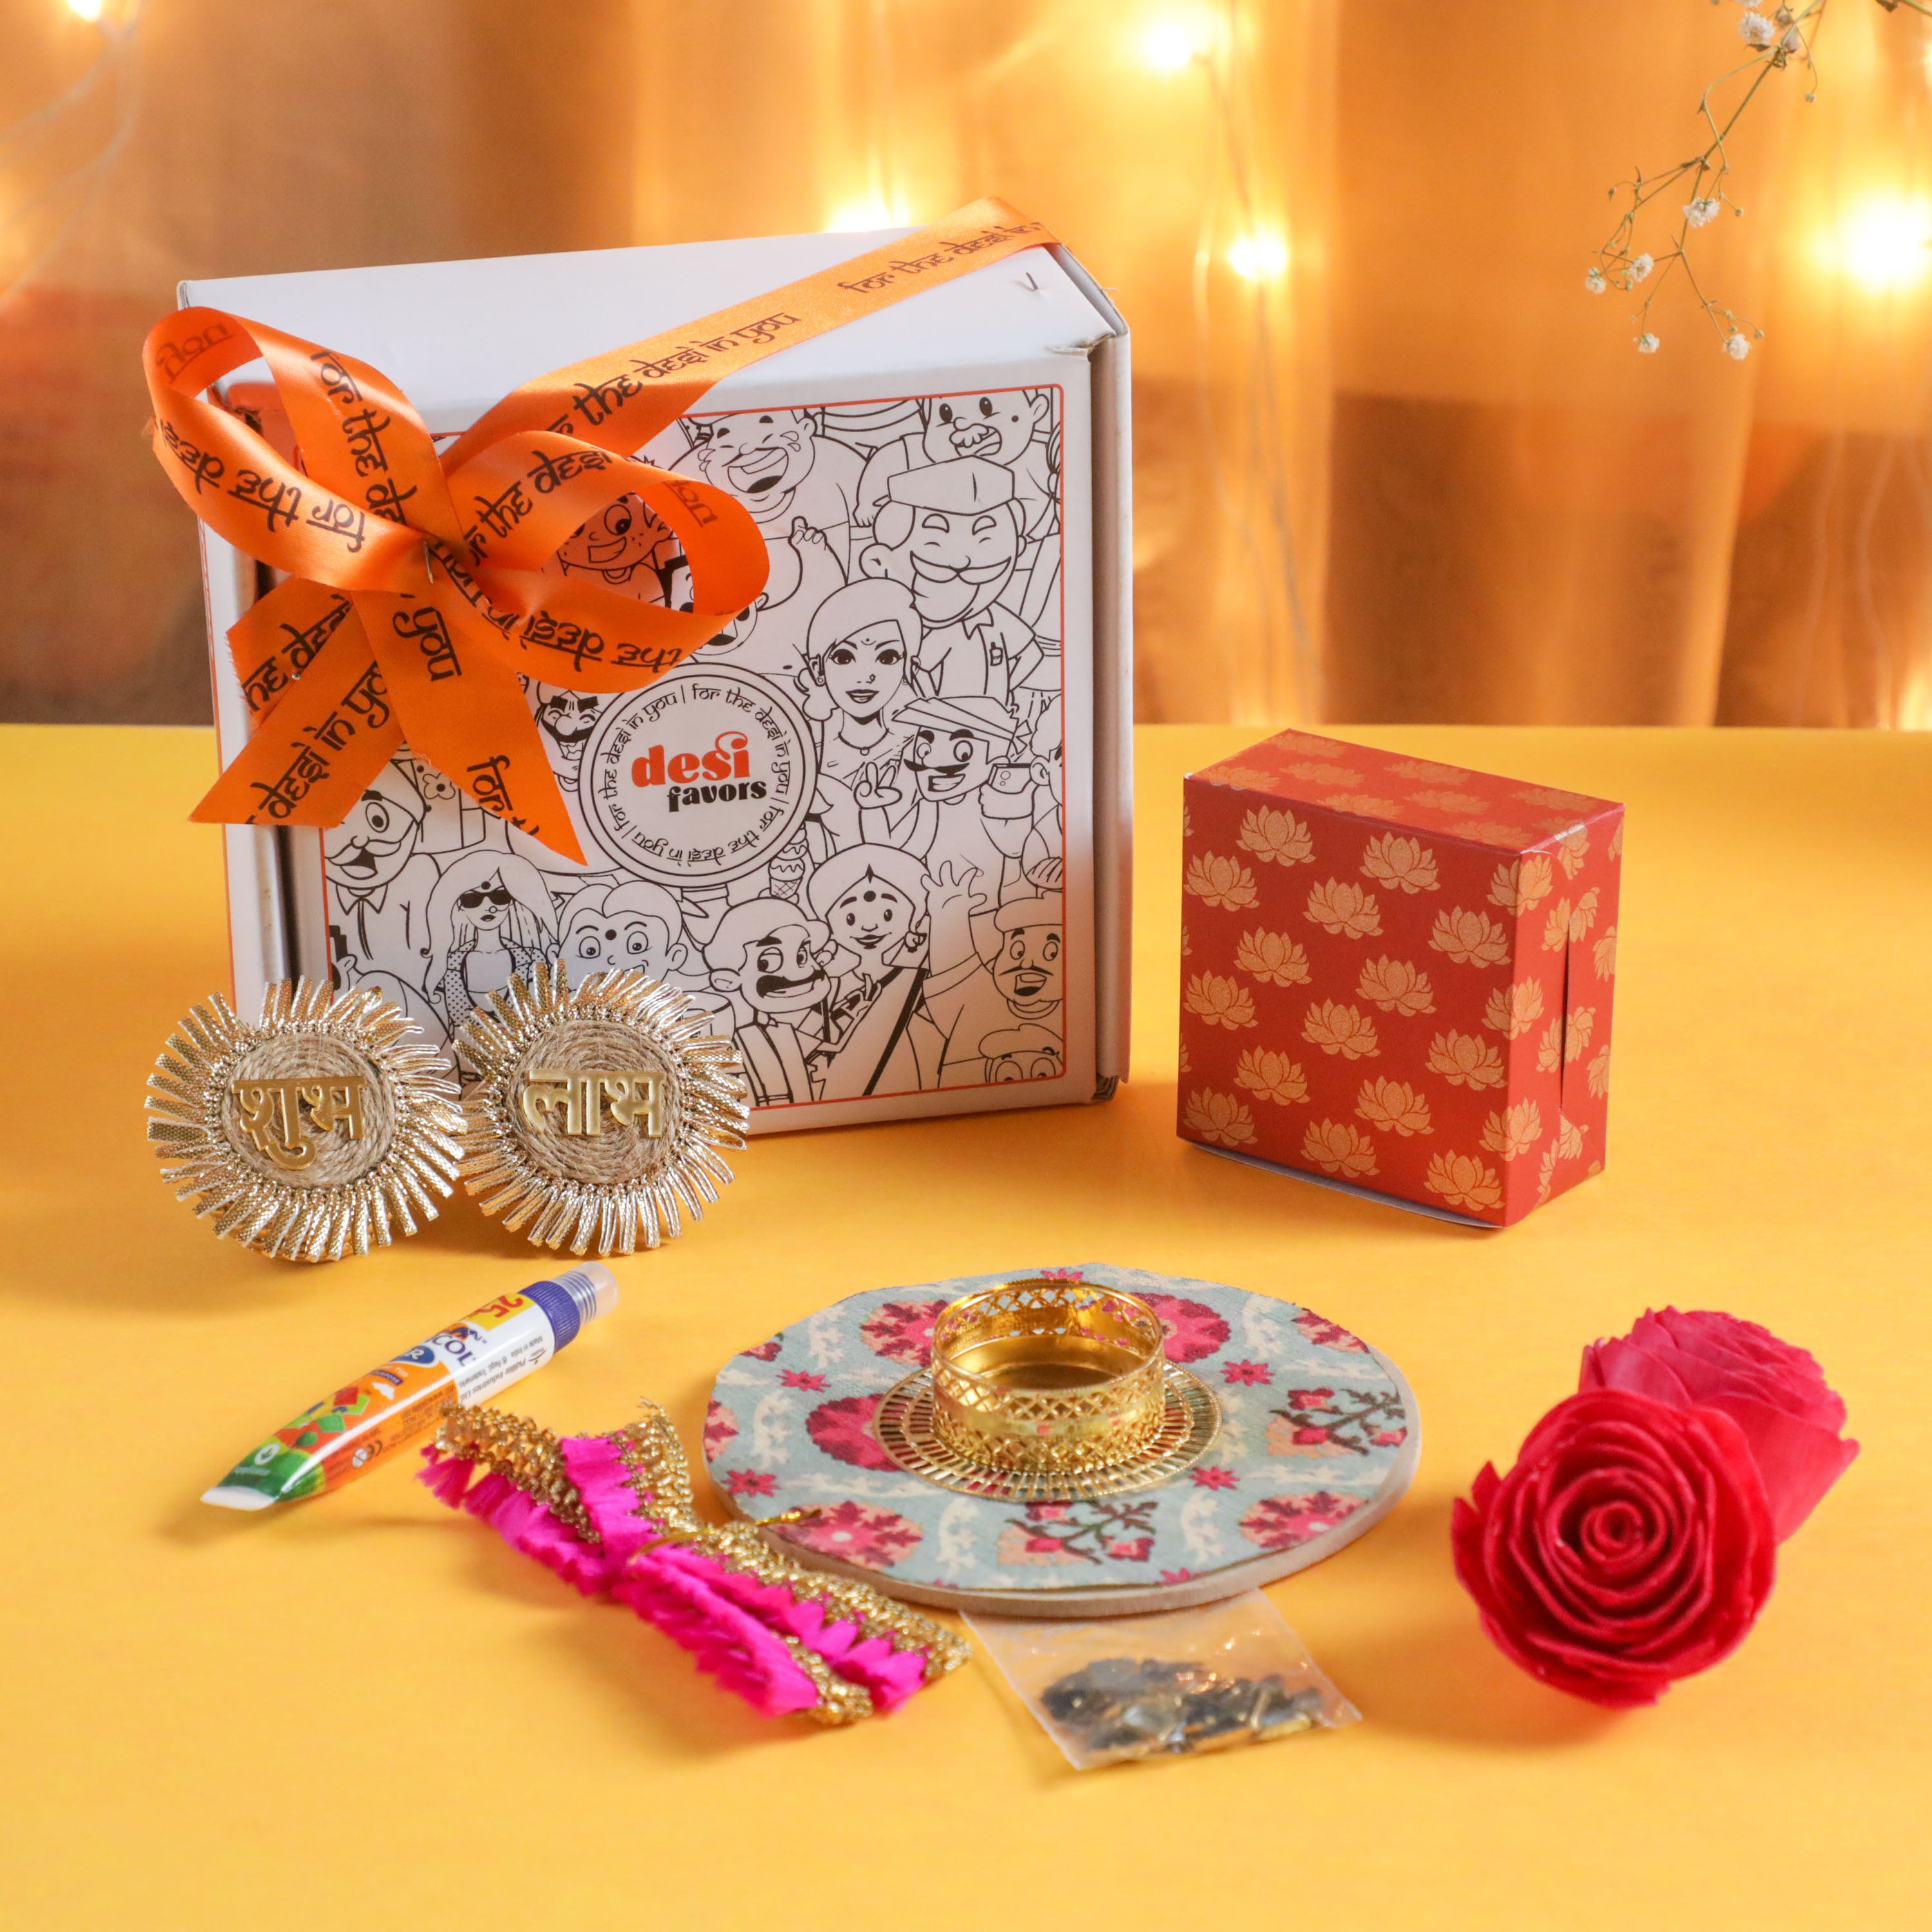 Diwali 2021: Best Diwali Gifts to Buy for Your Wife | Clovia Blog